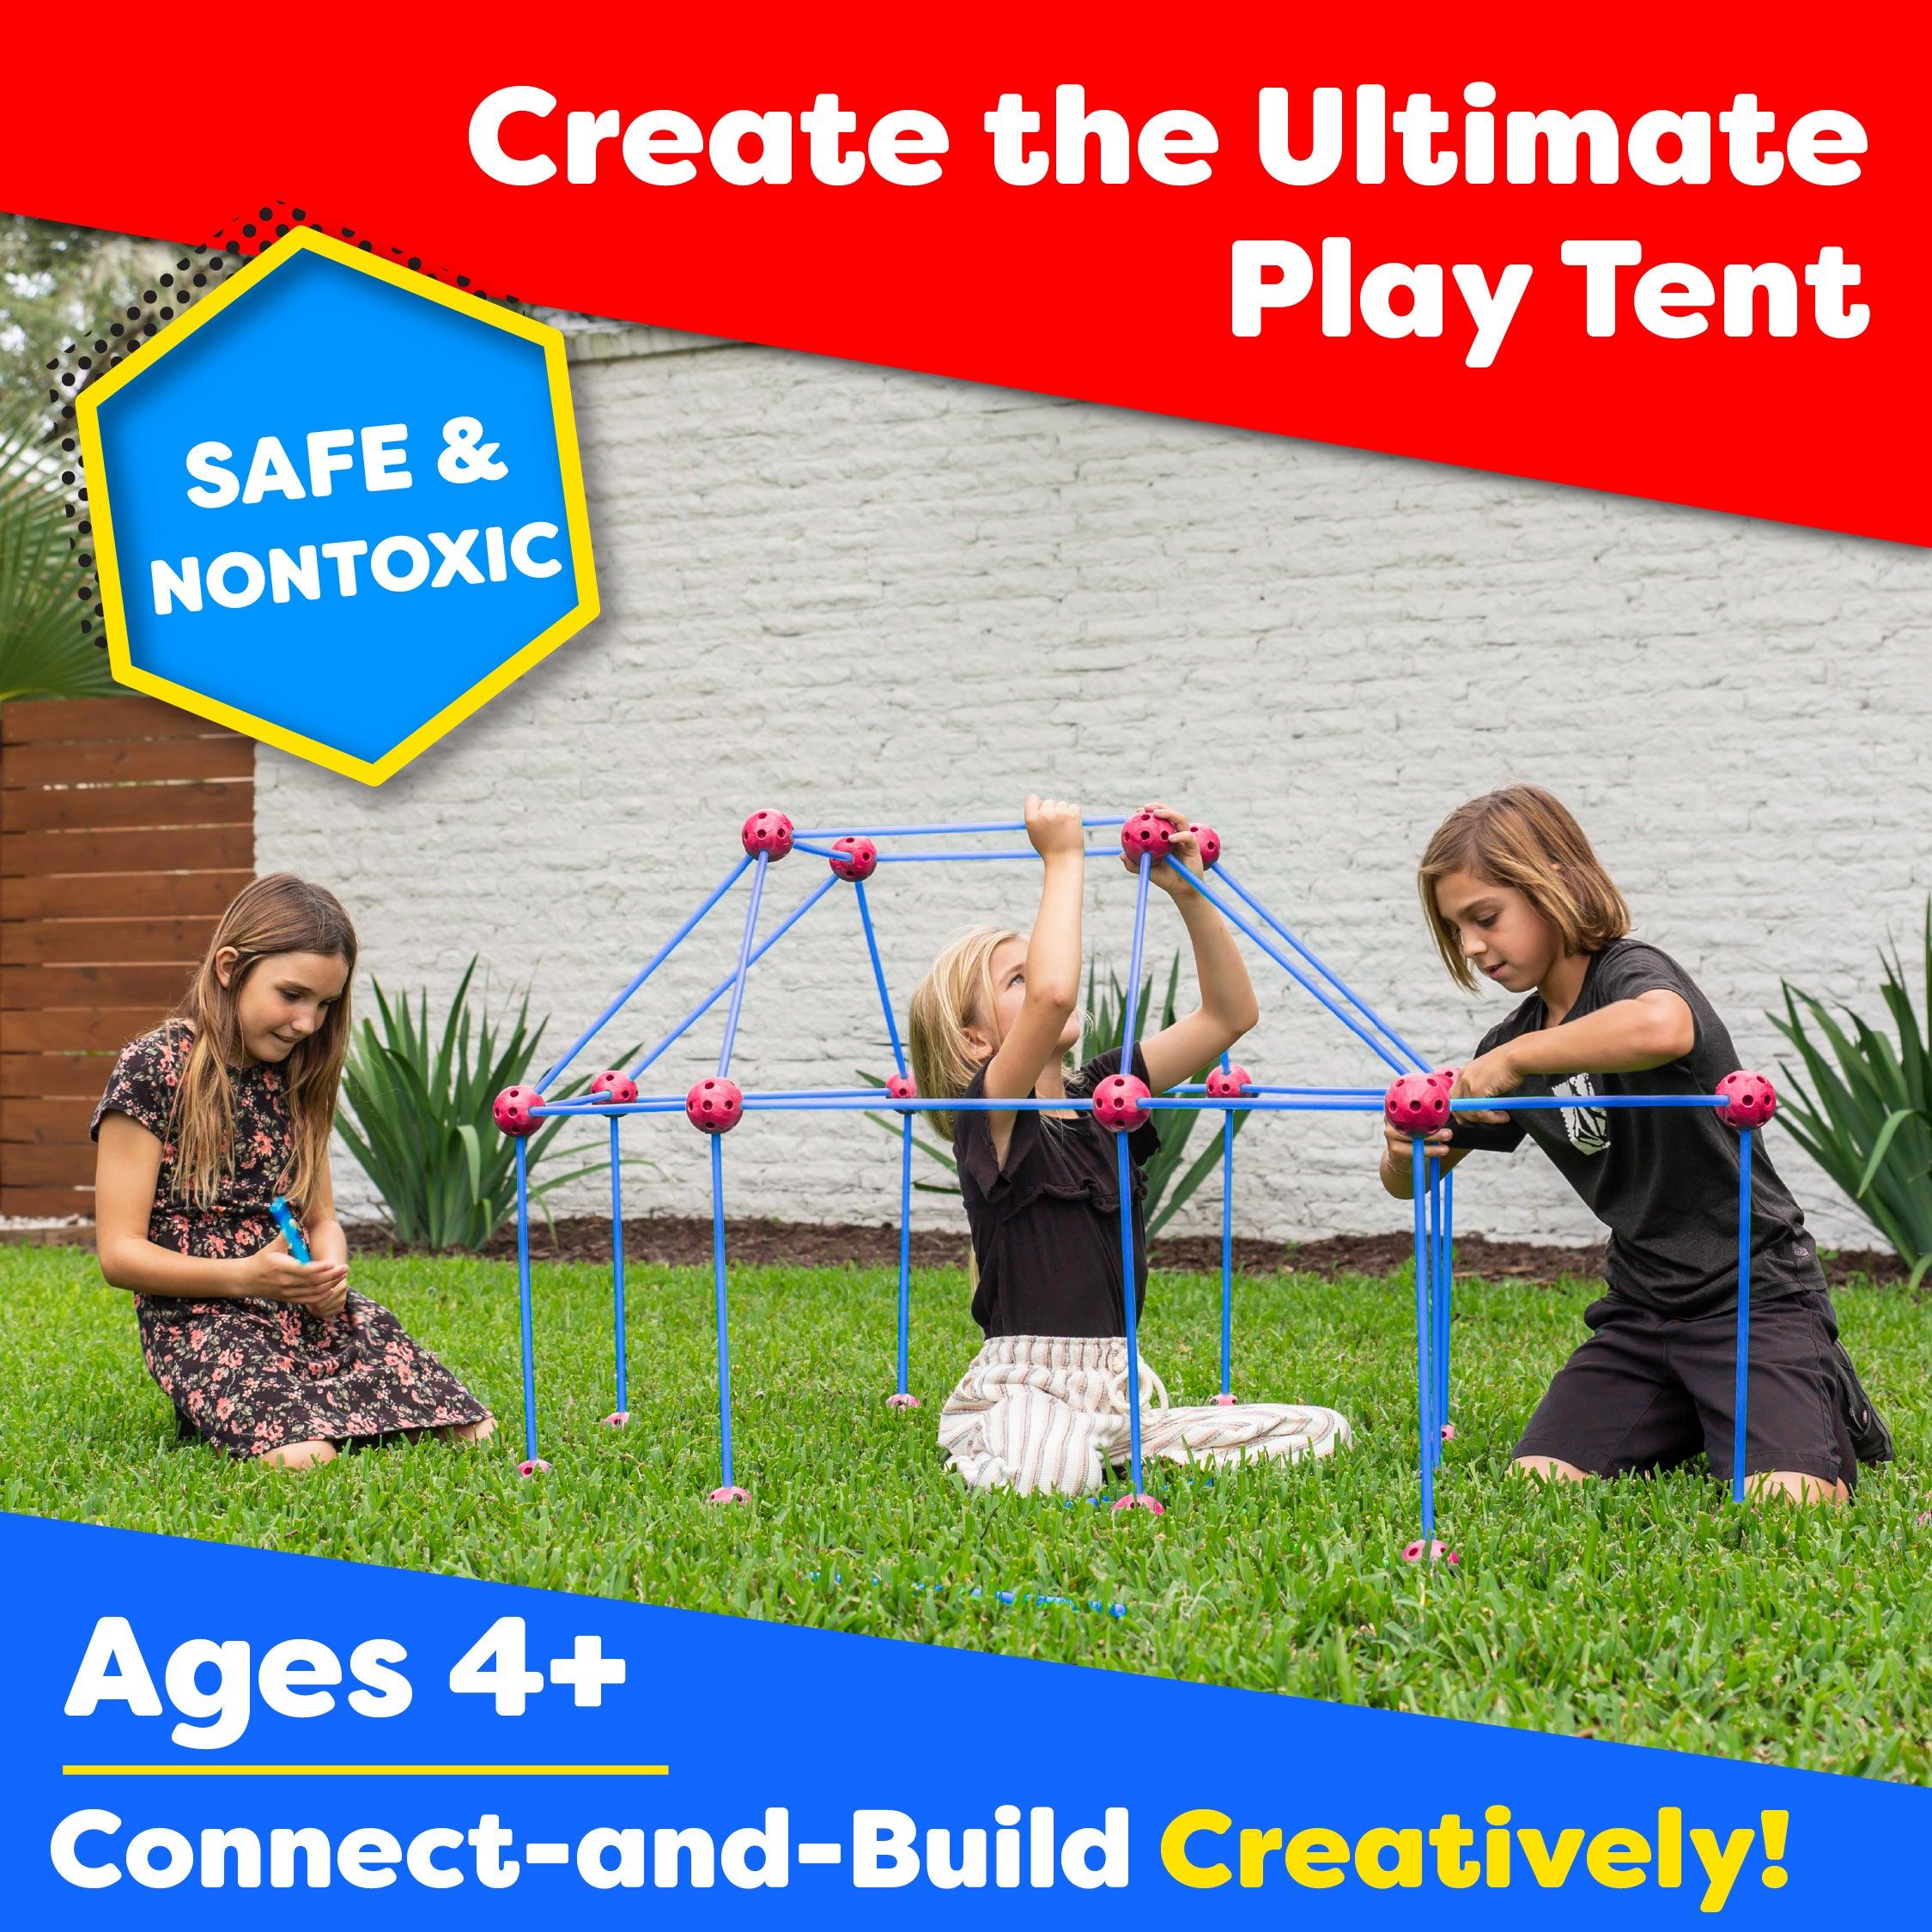 Power Your Fun 81pc Fun Forts Kids Tent Version 2